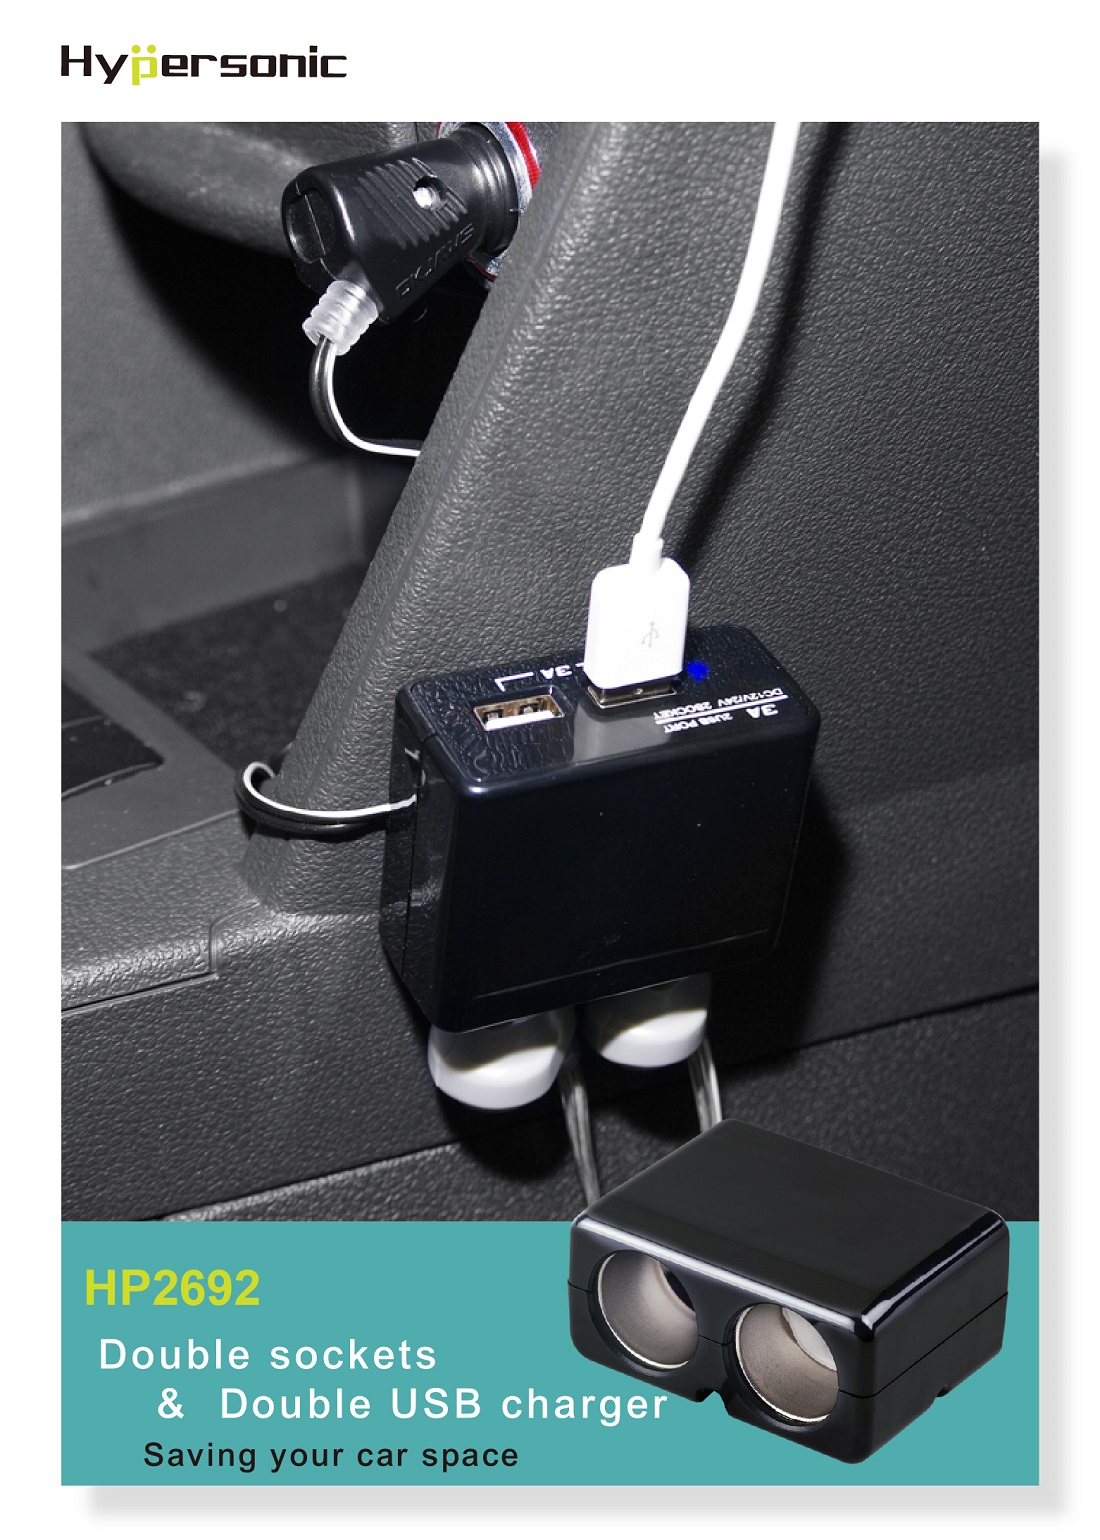 USB Charger Cigarette Lighter for Cars HP2692